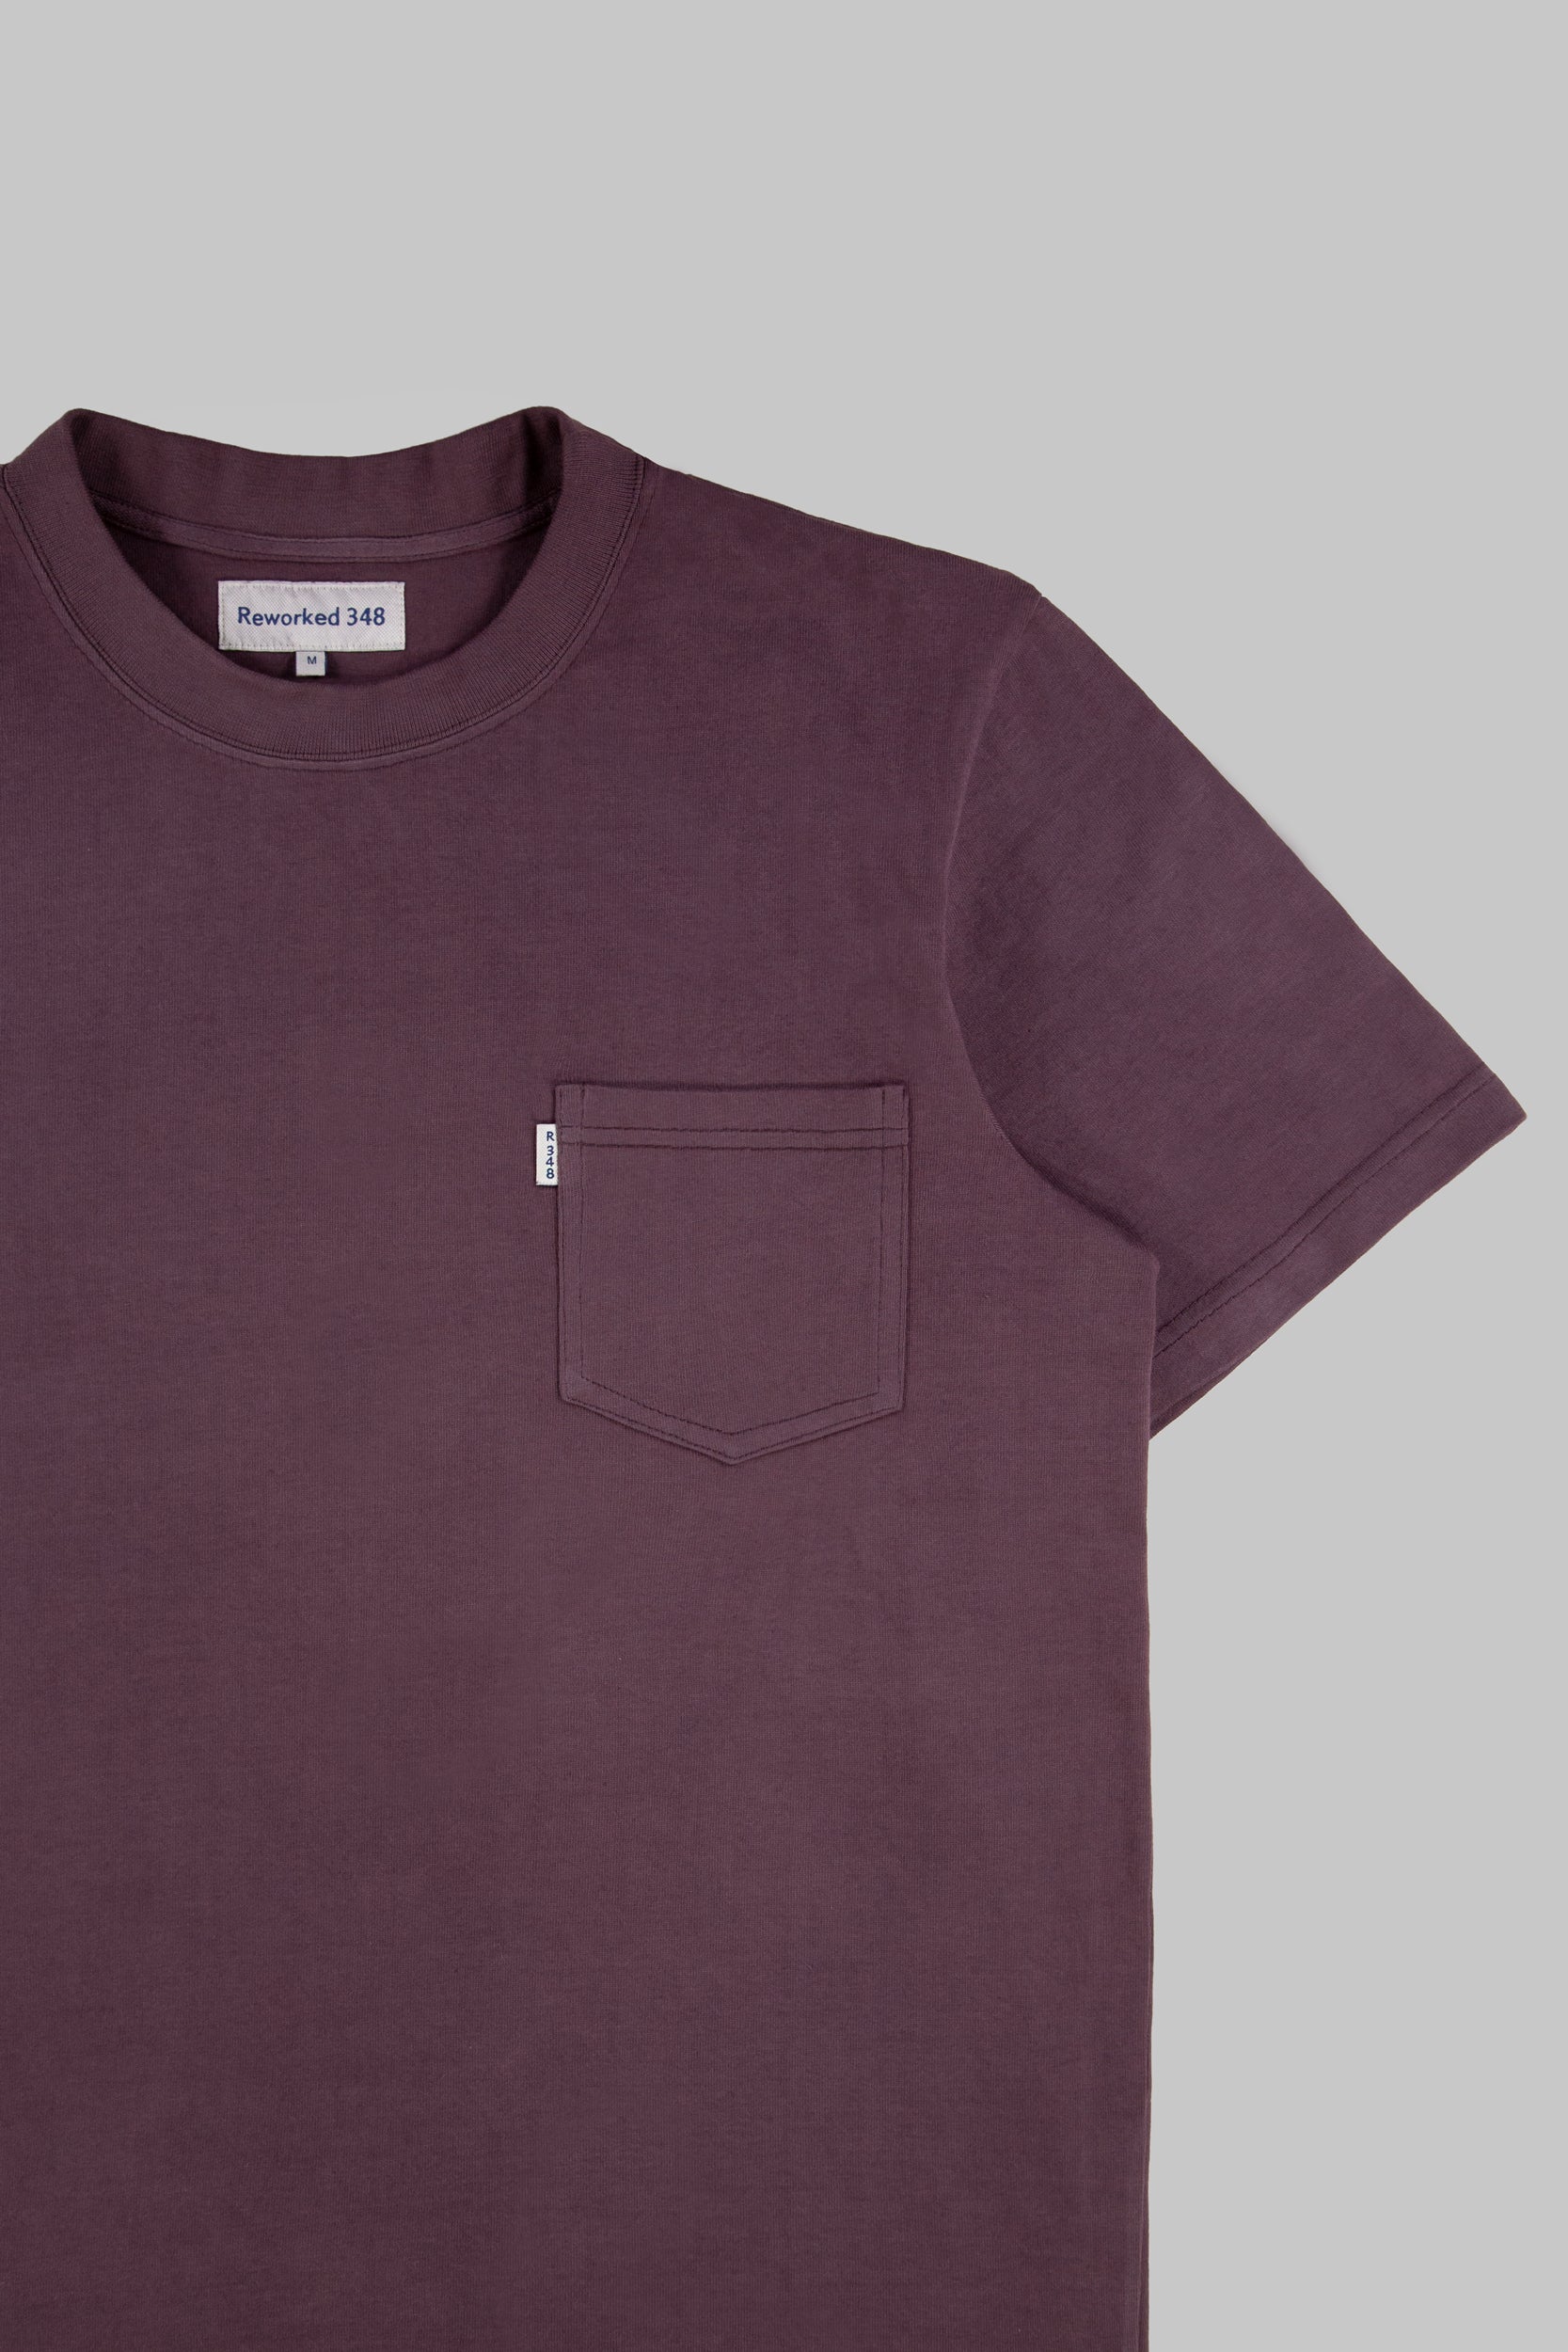 Pocket T-Shirt Bordeaux